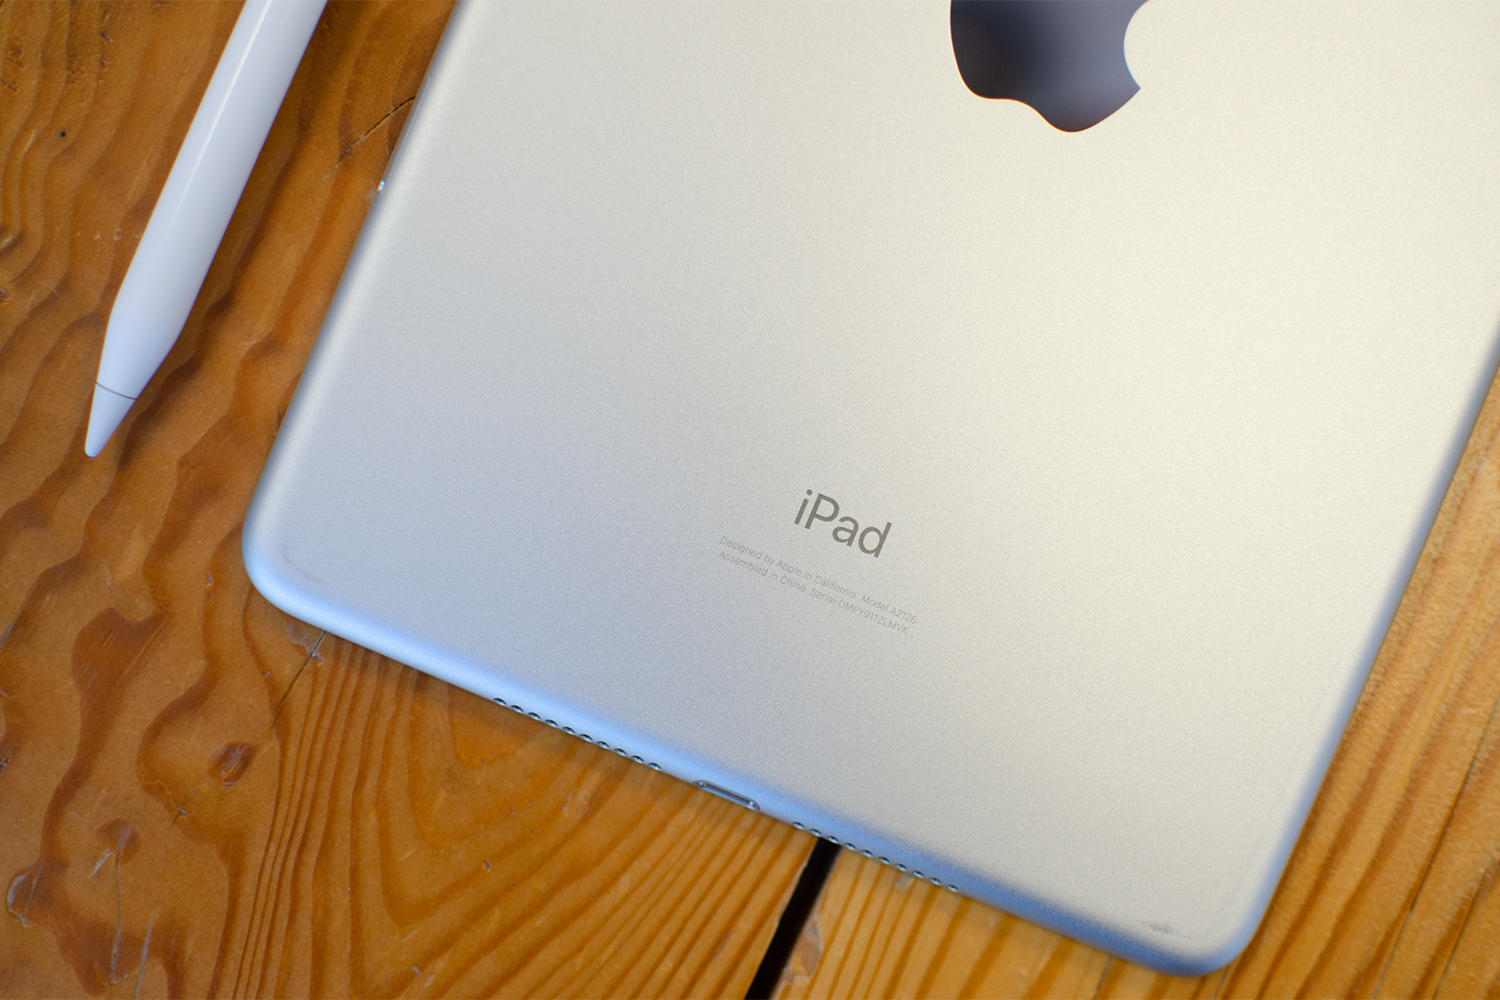 Apple iPad Mini Review, New 2019 Model